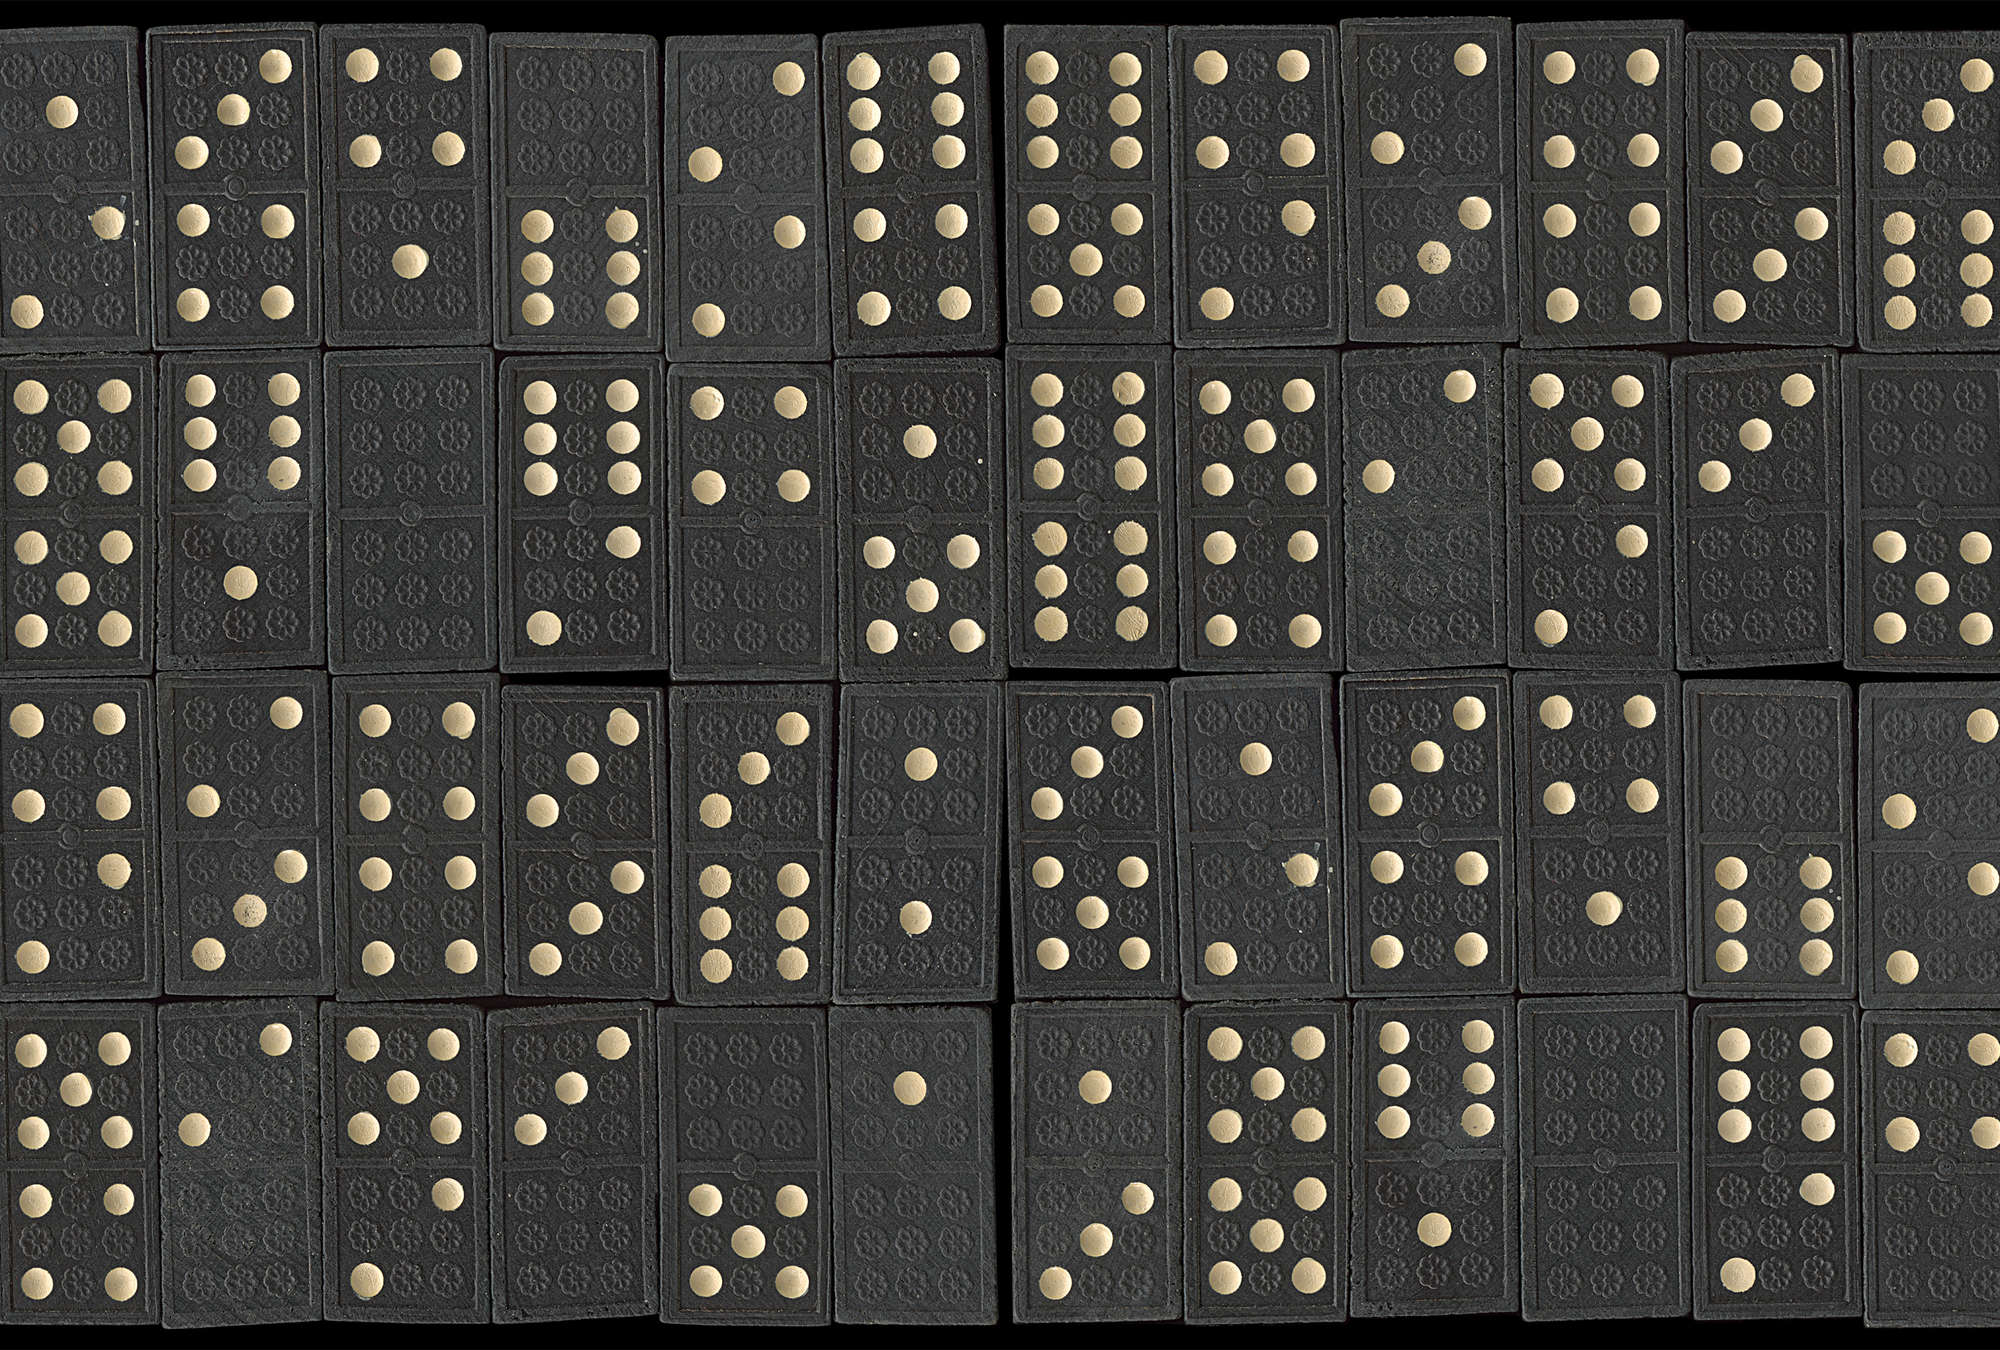             Photo wallpaper dominoes retro token pattern
        